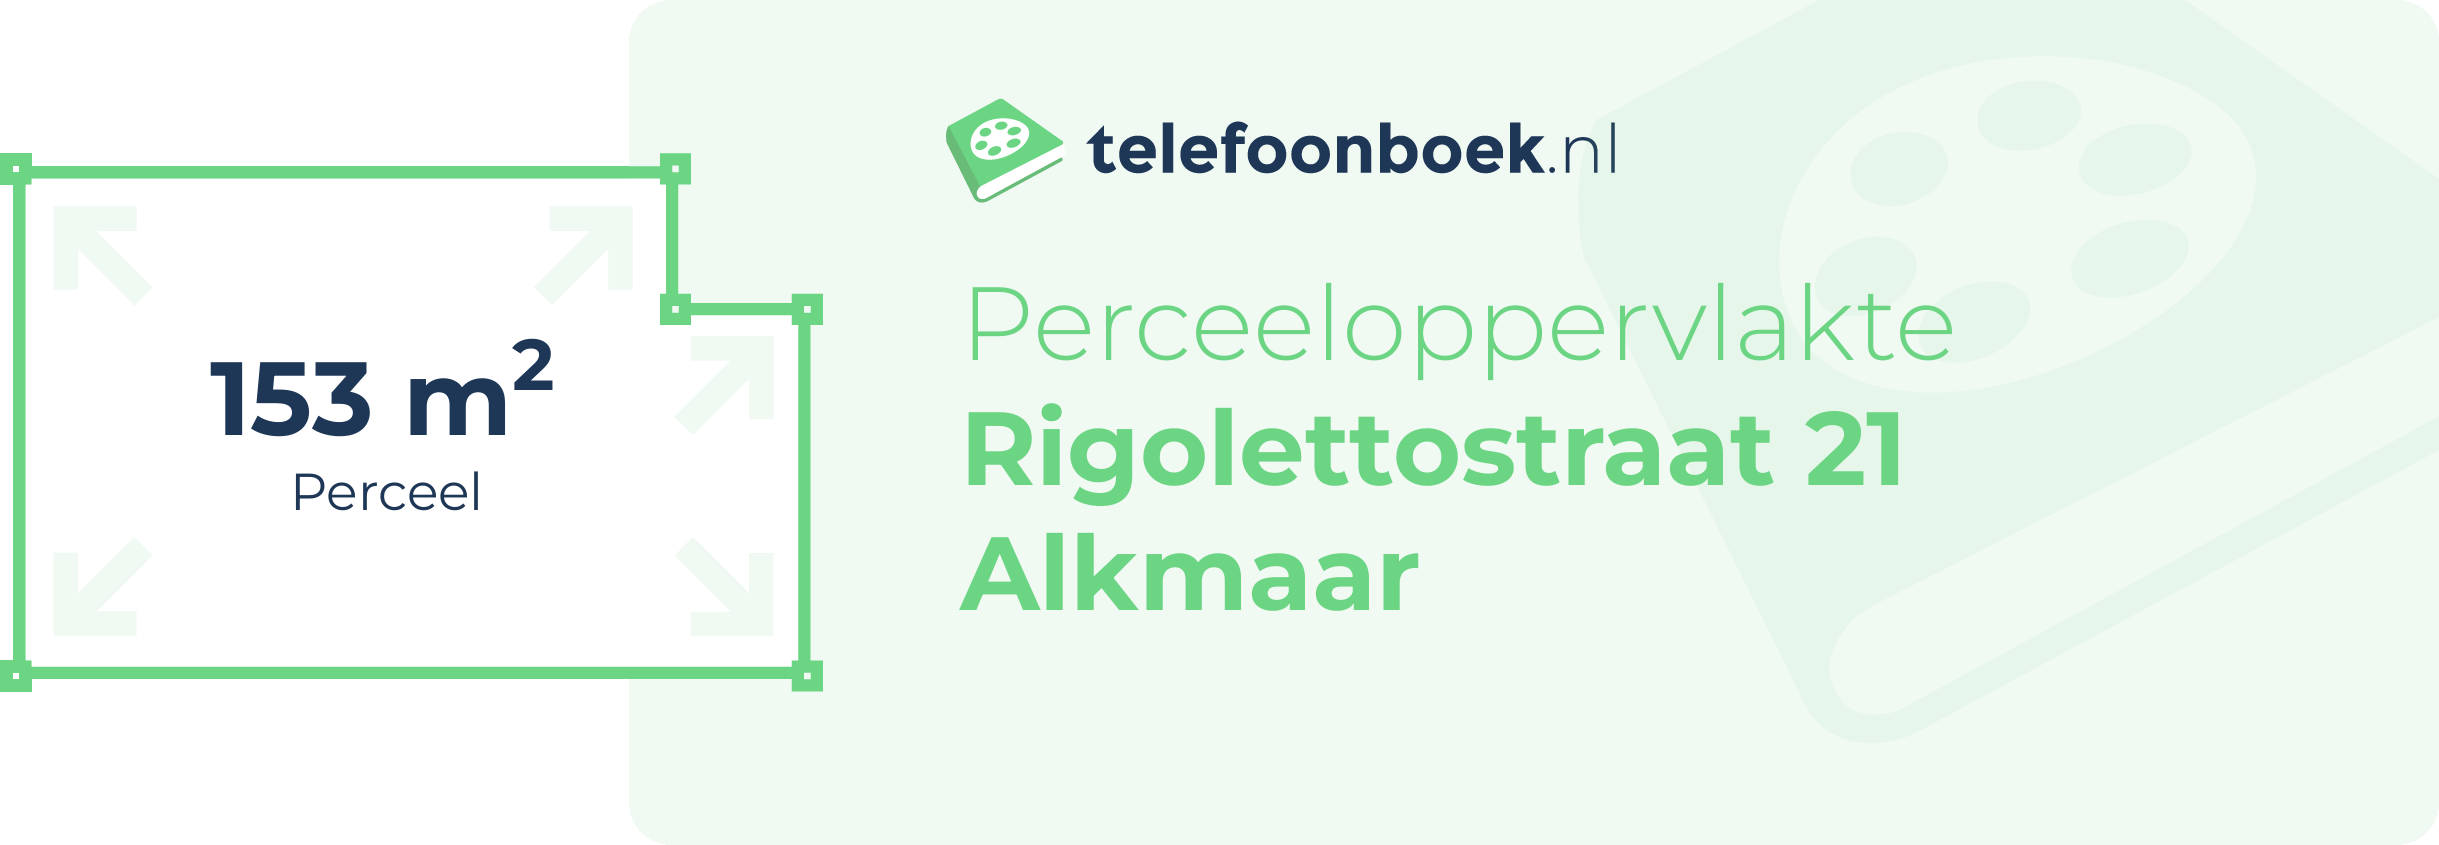 Perceeloppervlakte Rigolettostraat 21 Alkmaar